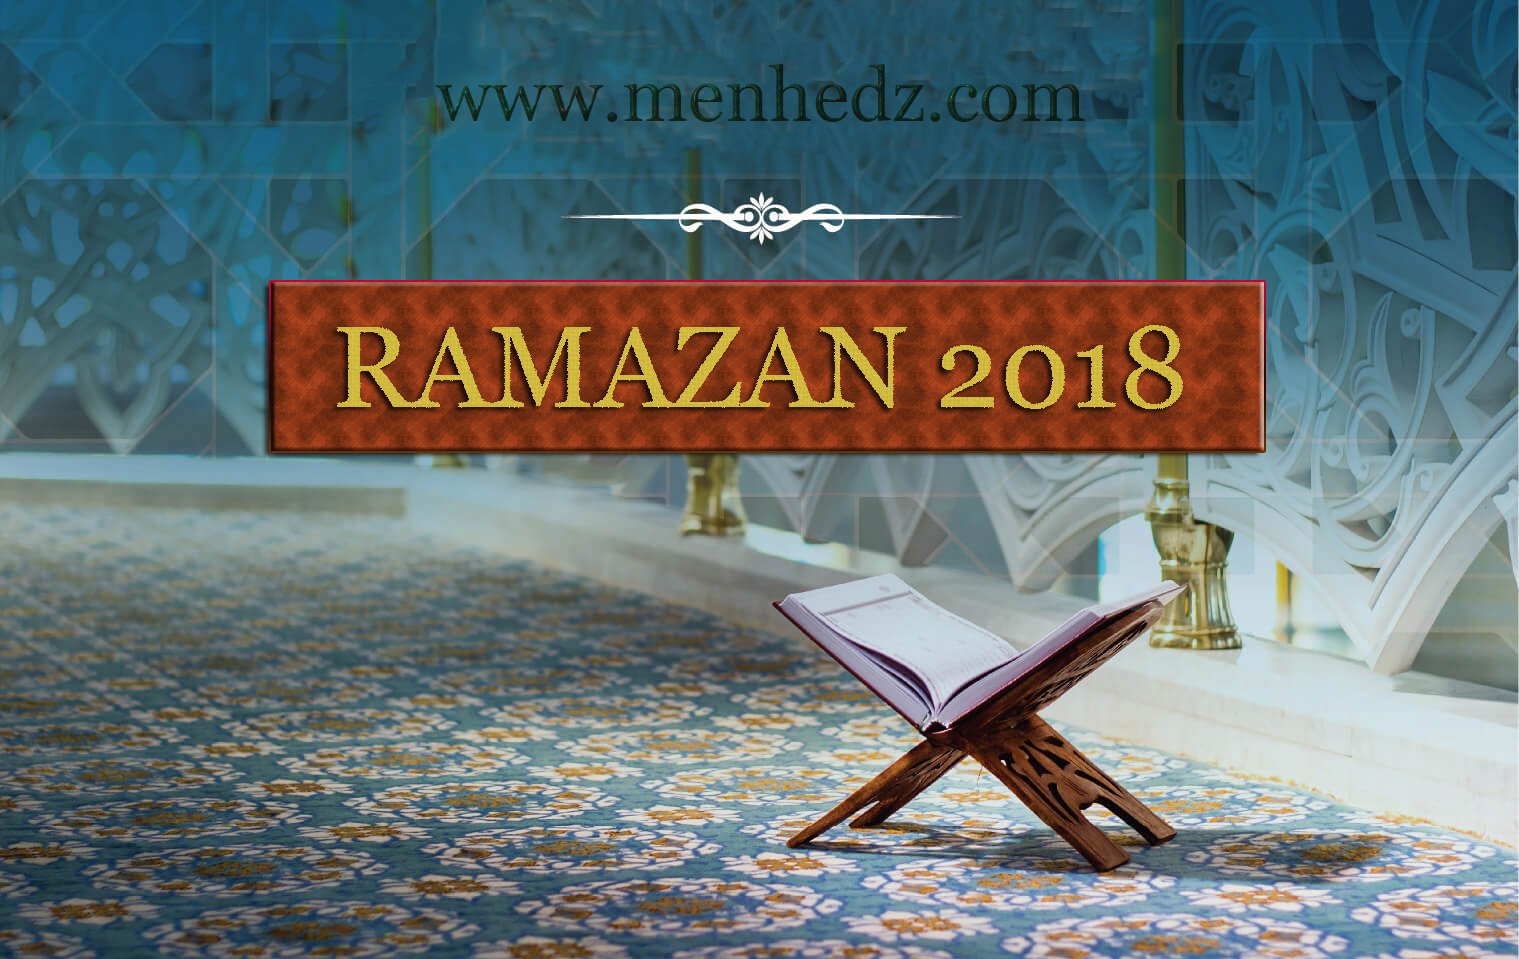 Ramazan 2018, docek ramazana